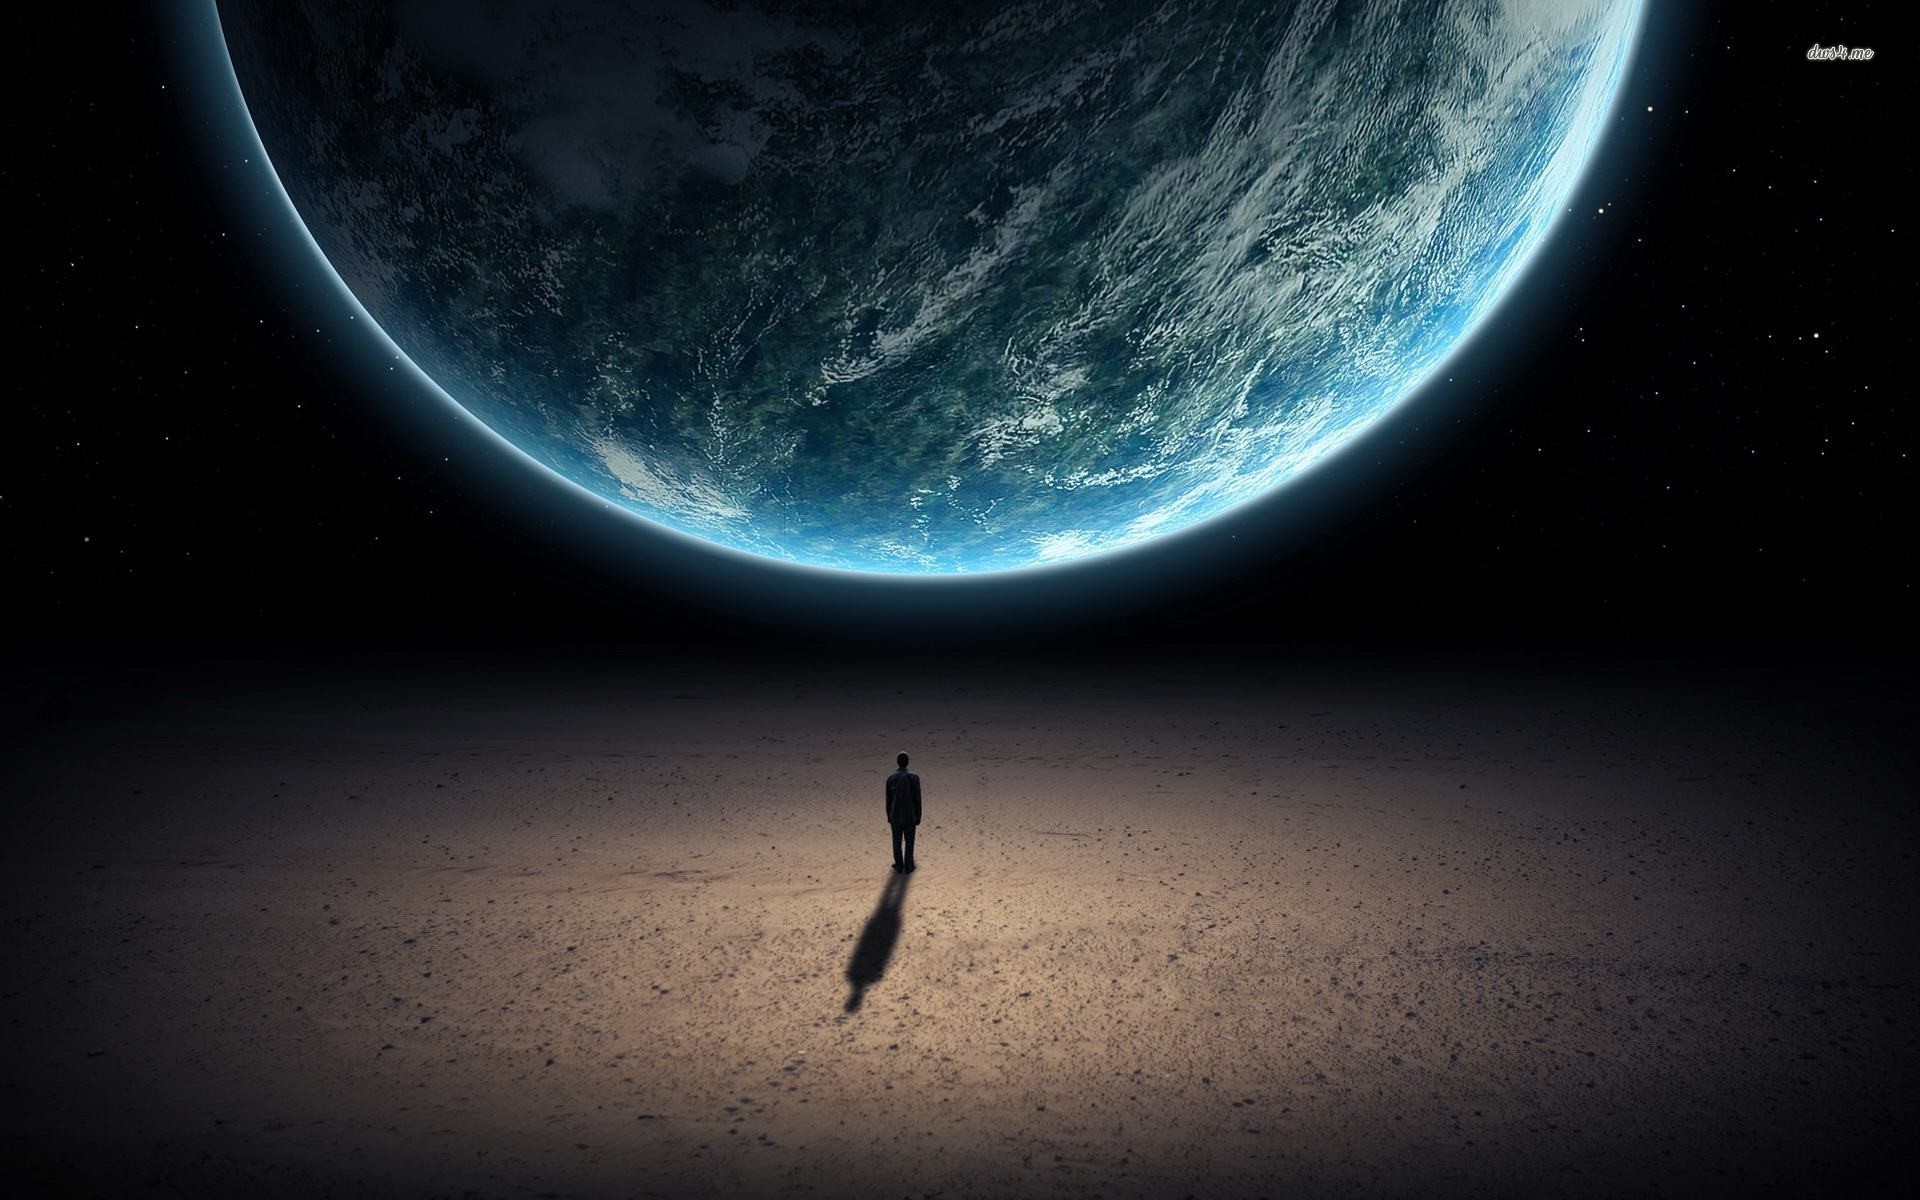 Man On Moon Looking At Earth - 1920x1200 Wallpaper 